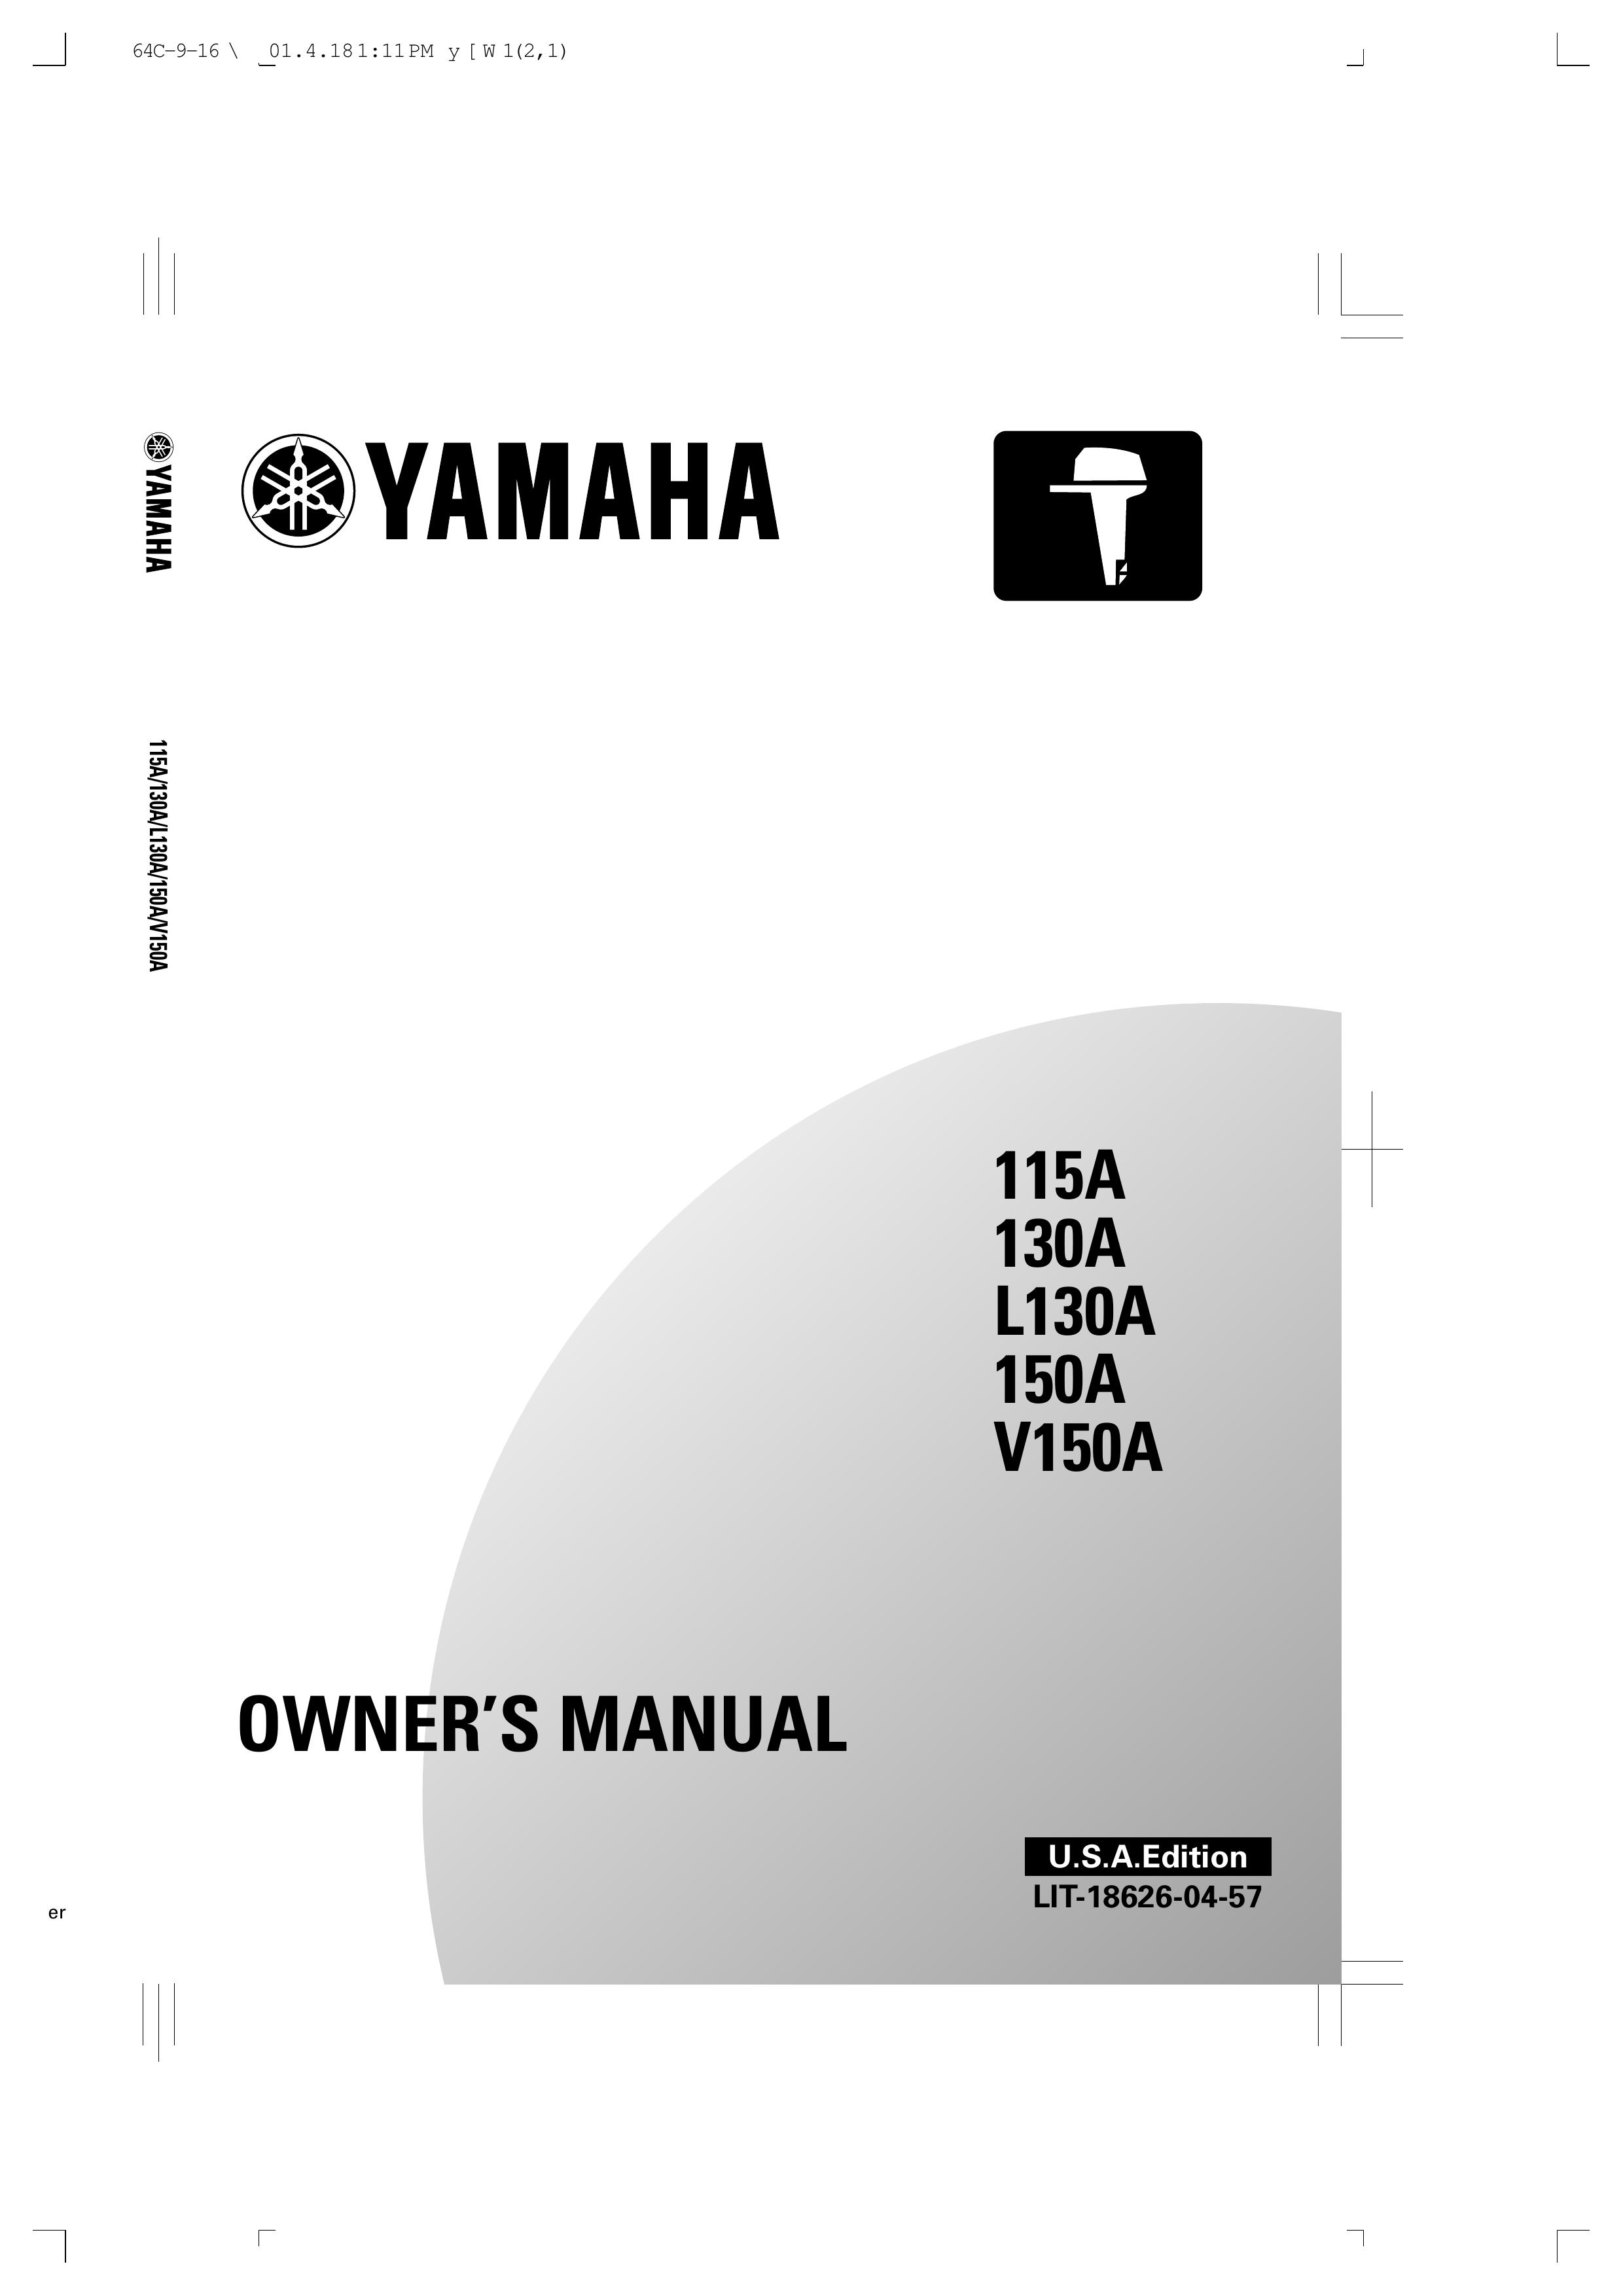 Yamaha 130A Outboard Motor User Manual